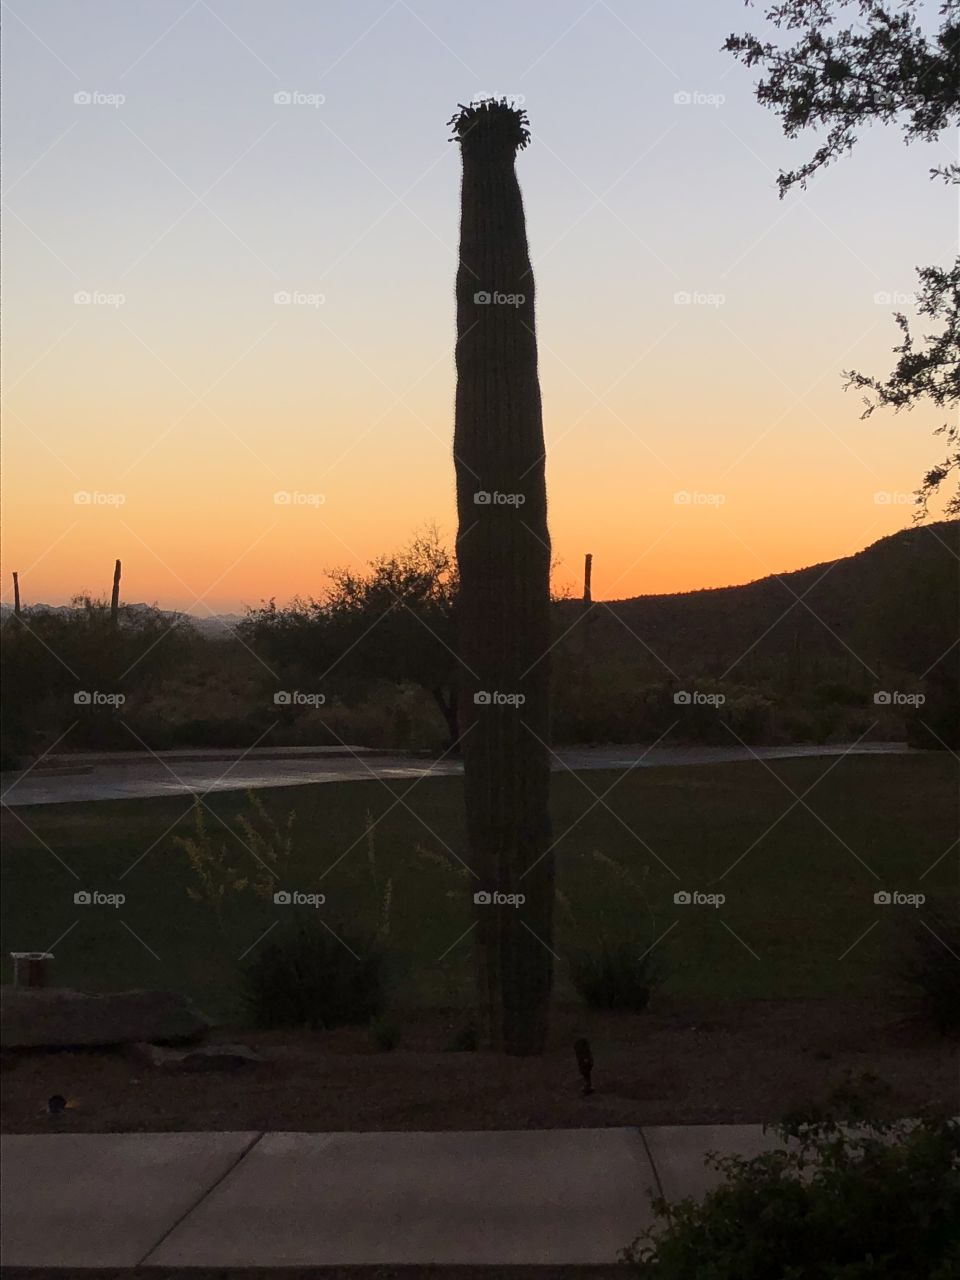 A stunning desert sunset in Tucson, Arizona featuring a cactus. 